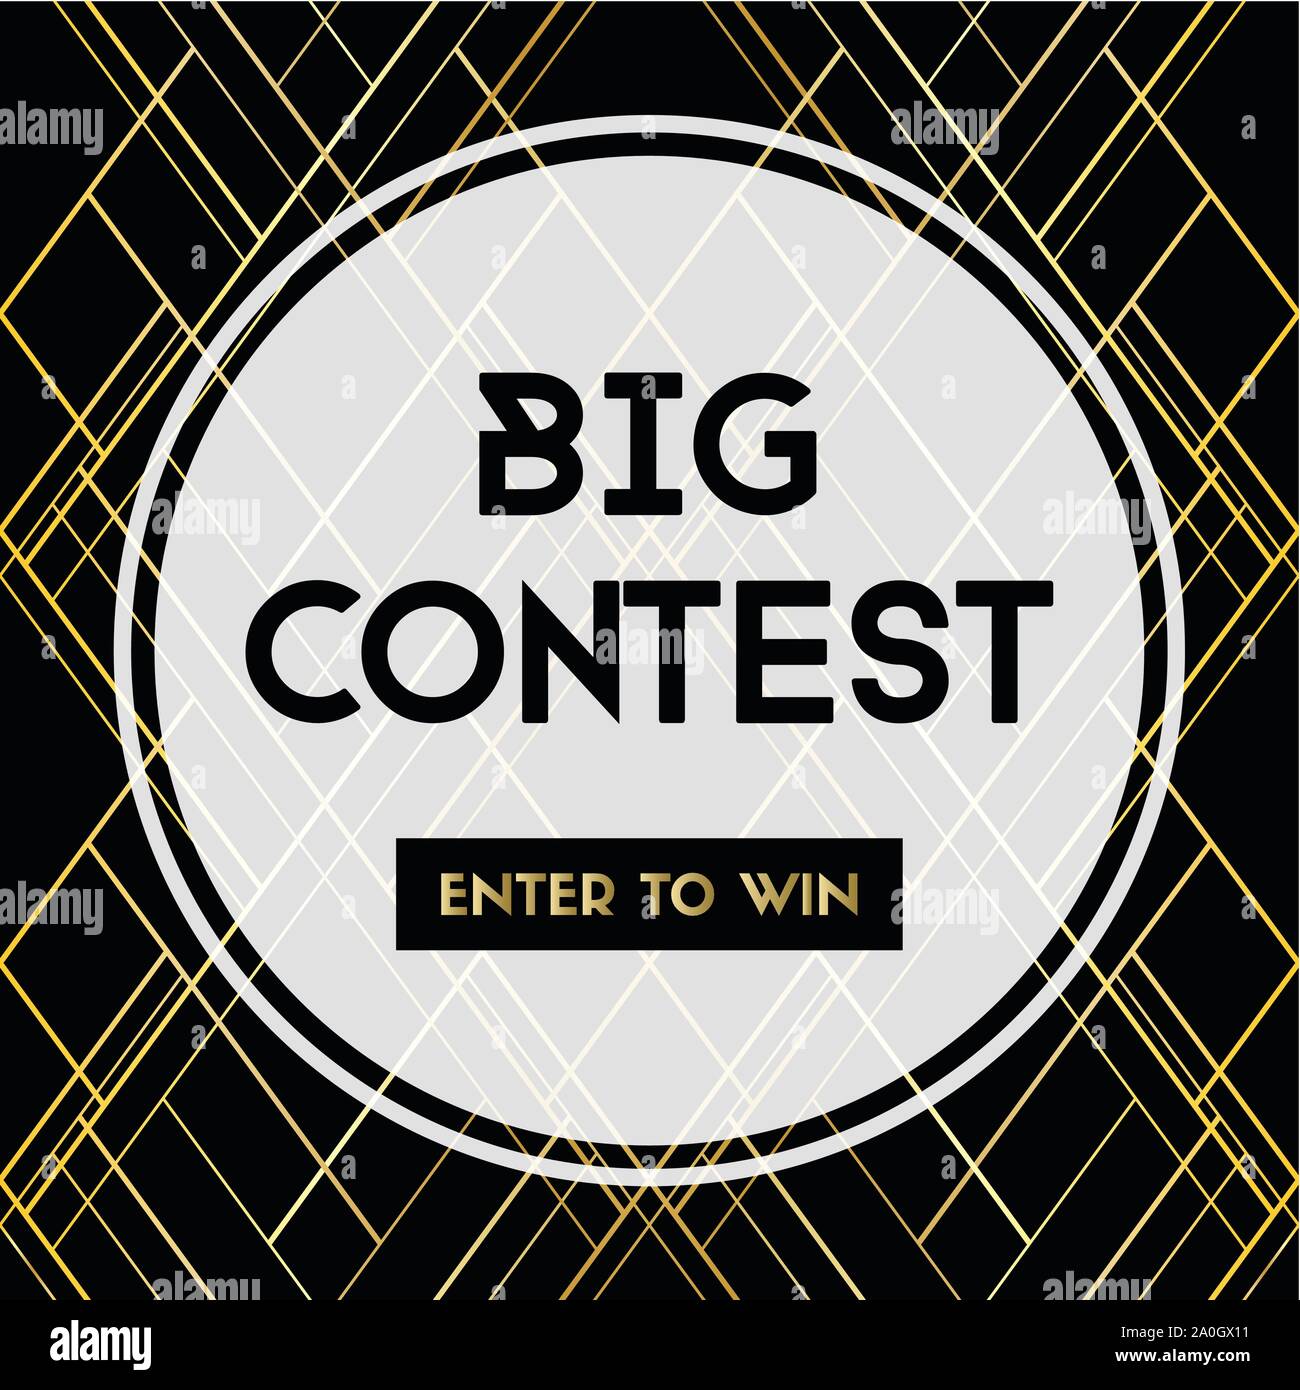 Big contest. Enter to win. Banner for social media Stock Vector